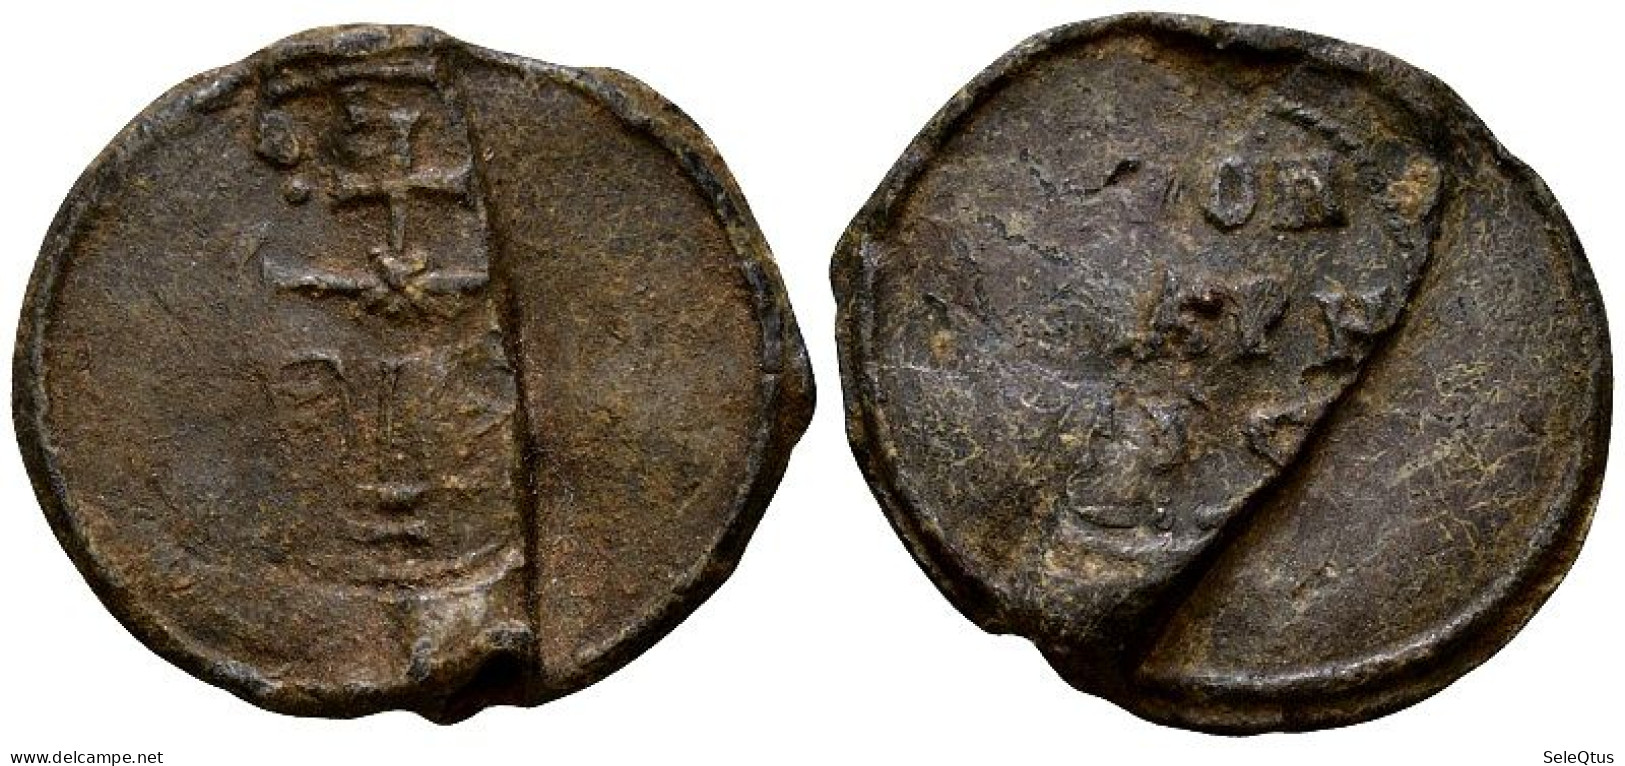 Sellos Antiguos - Ancient Seals (00130-007-1105) - Antiek Gereedschap